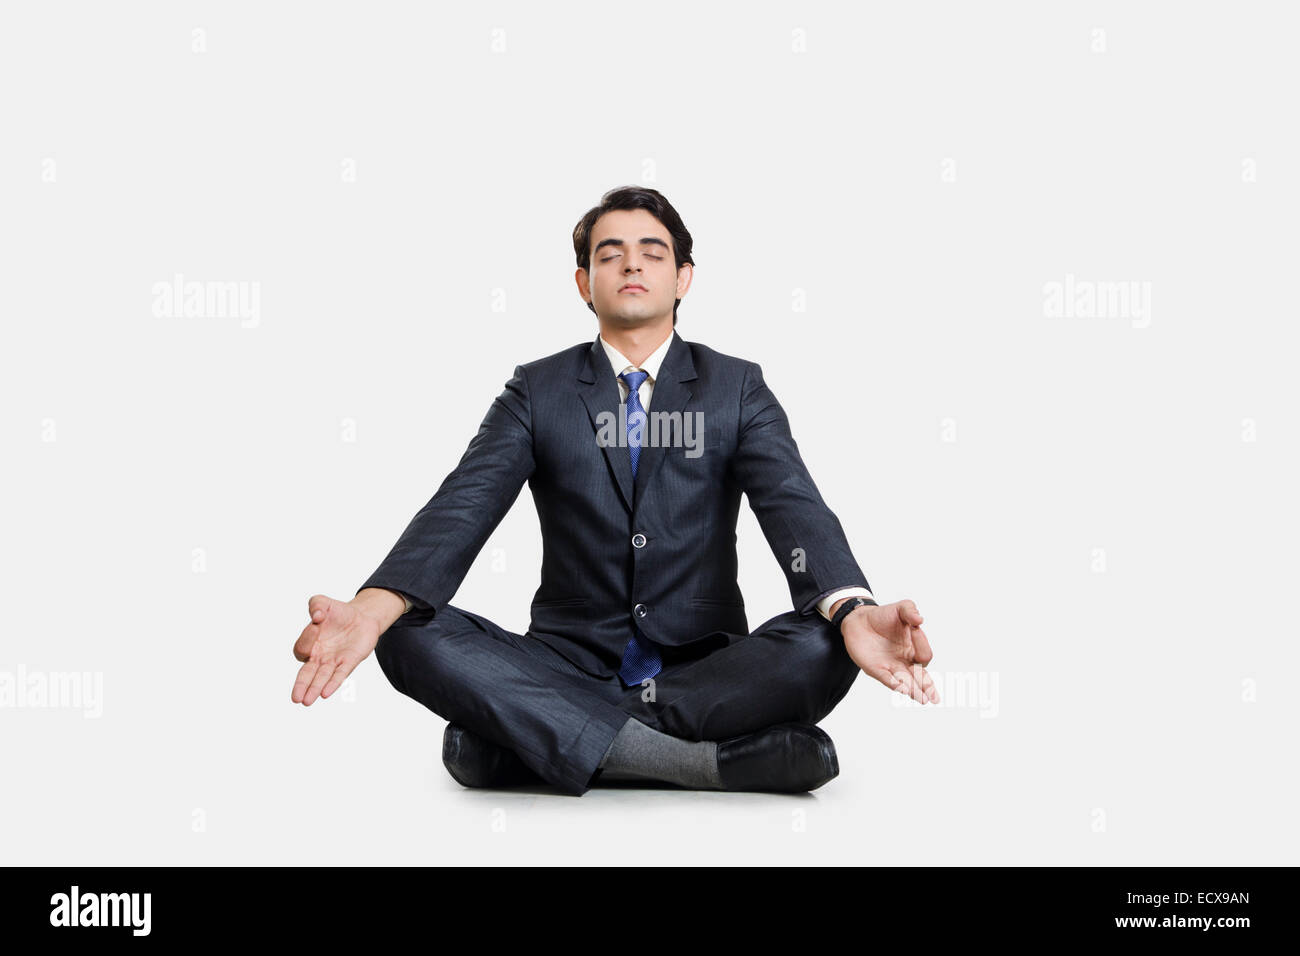 1 indian Business man yoga  Meditation Stock Photo